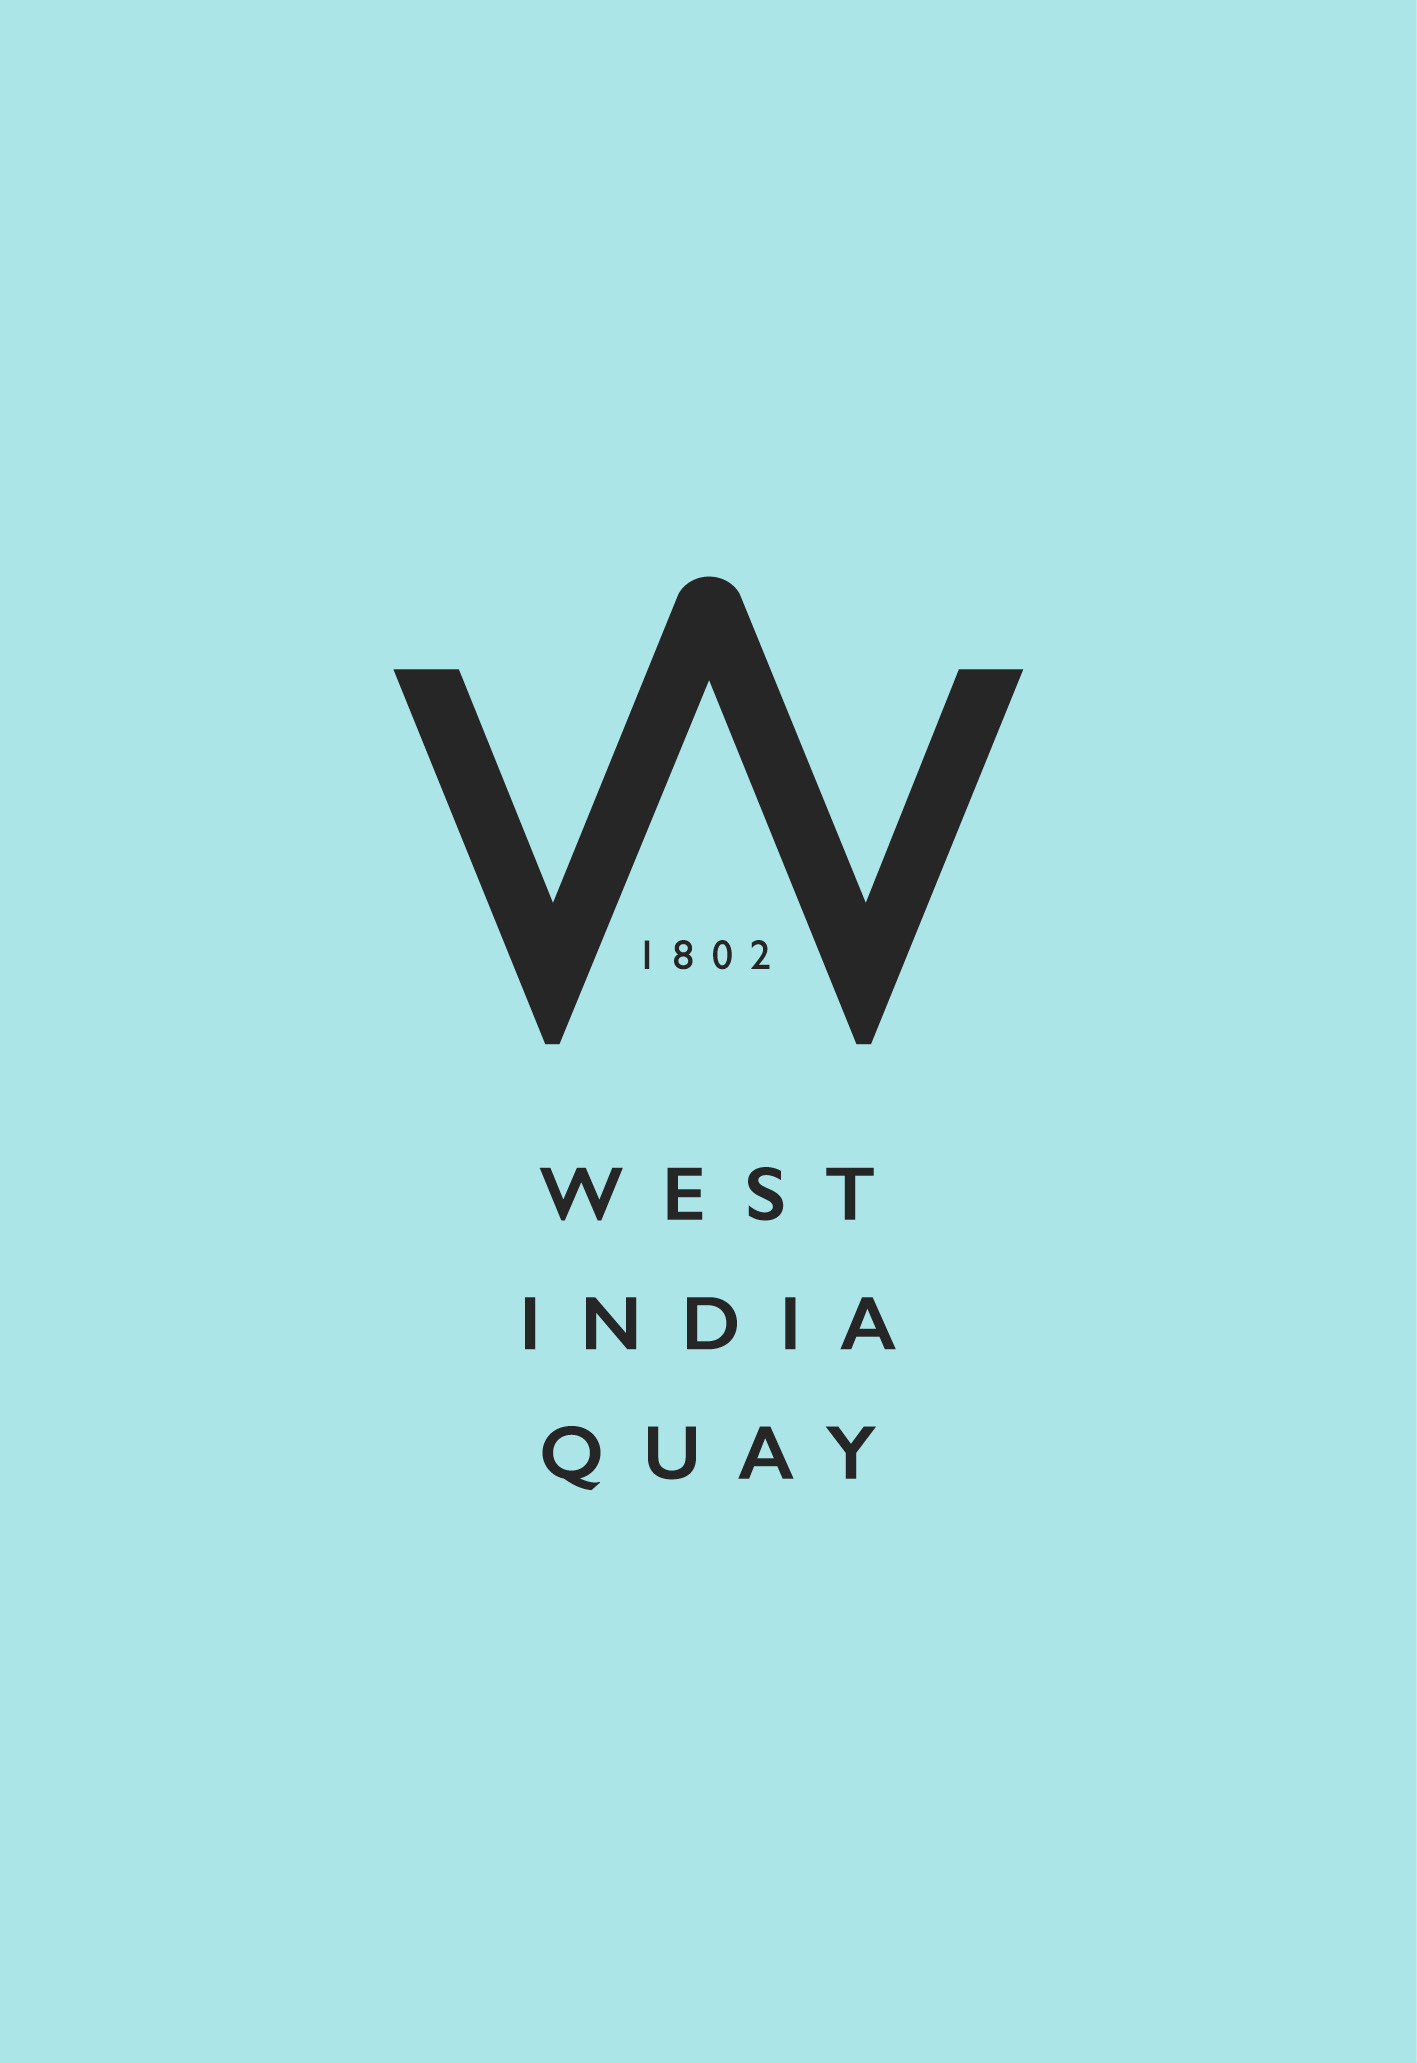 West India Quay Brand Identity